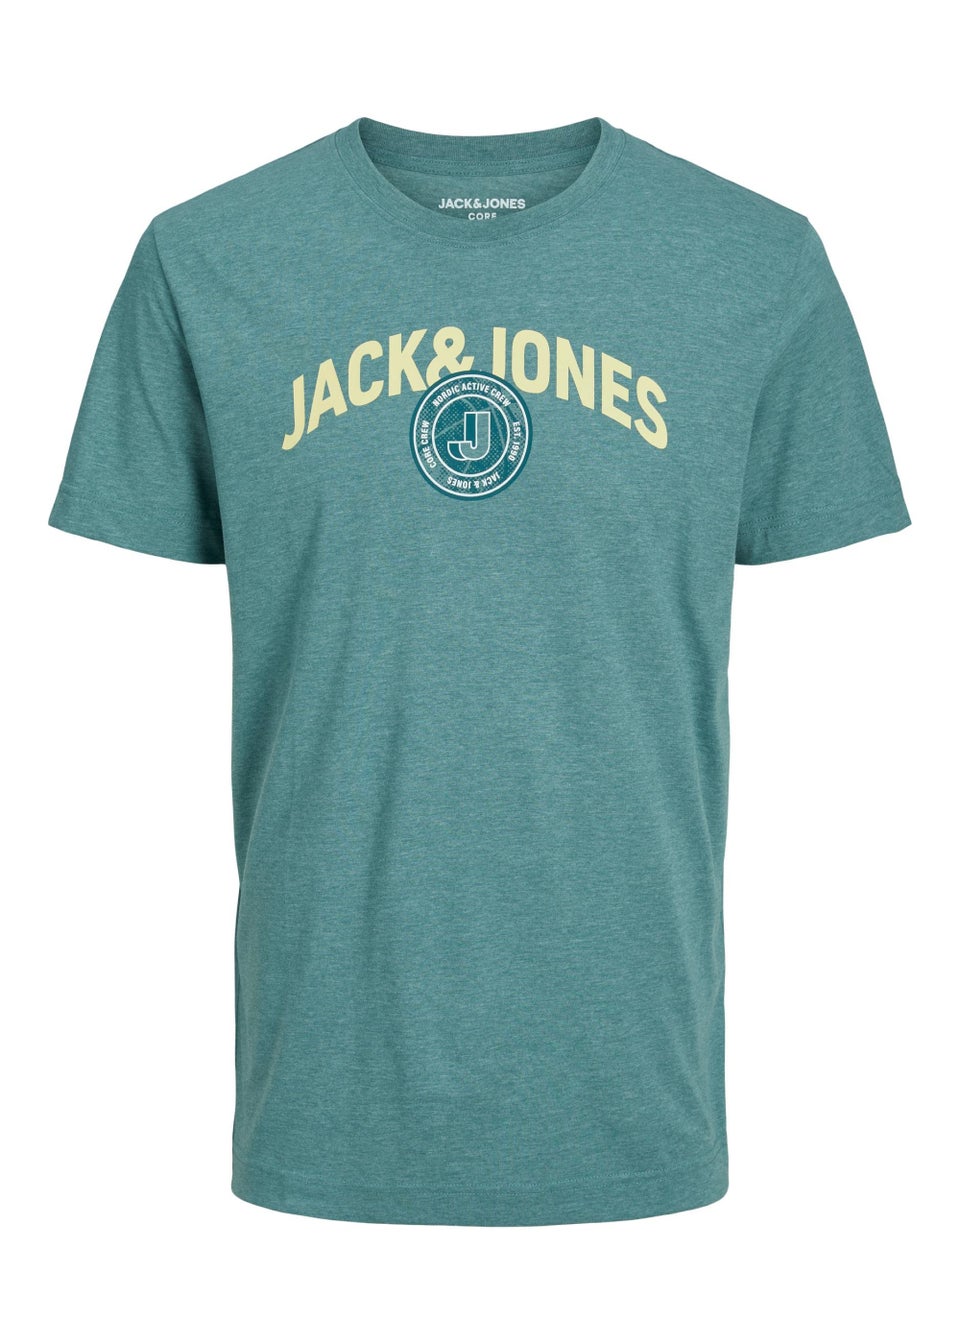 Jack & Jones Junior Teal Logo T-Shirt (6-16yrs)